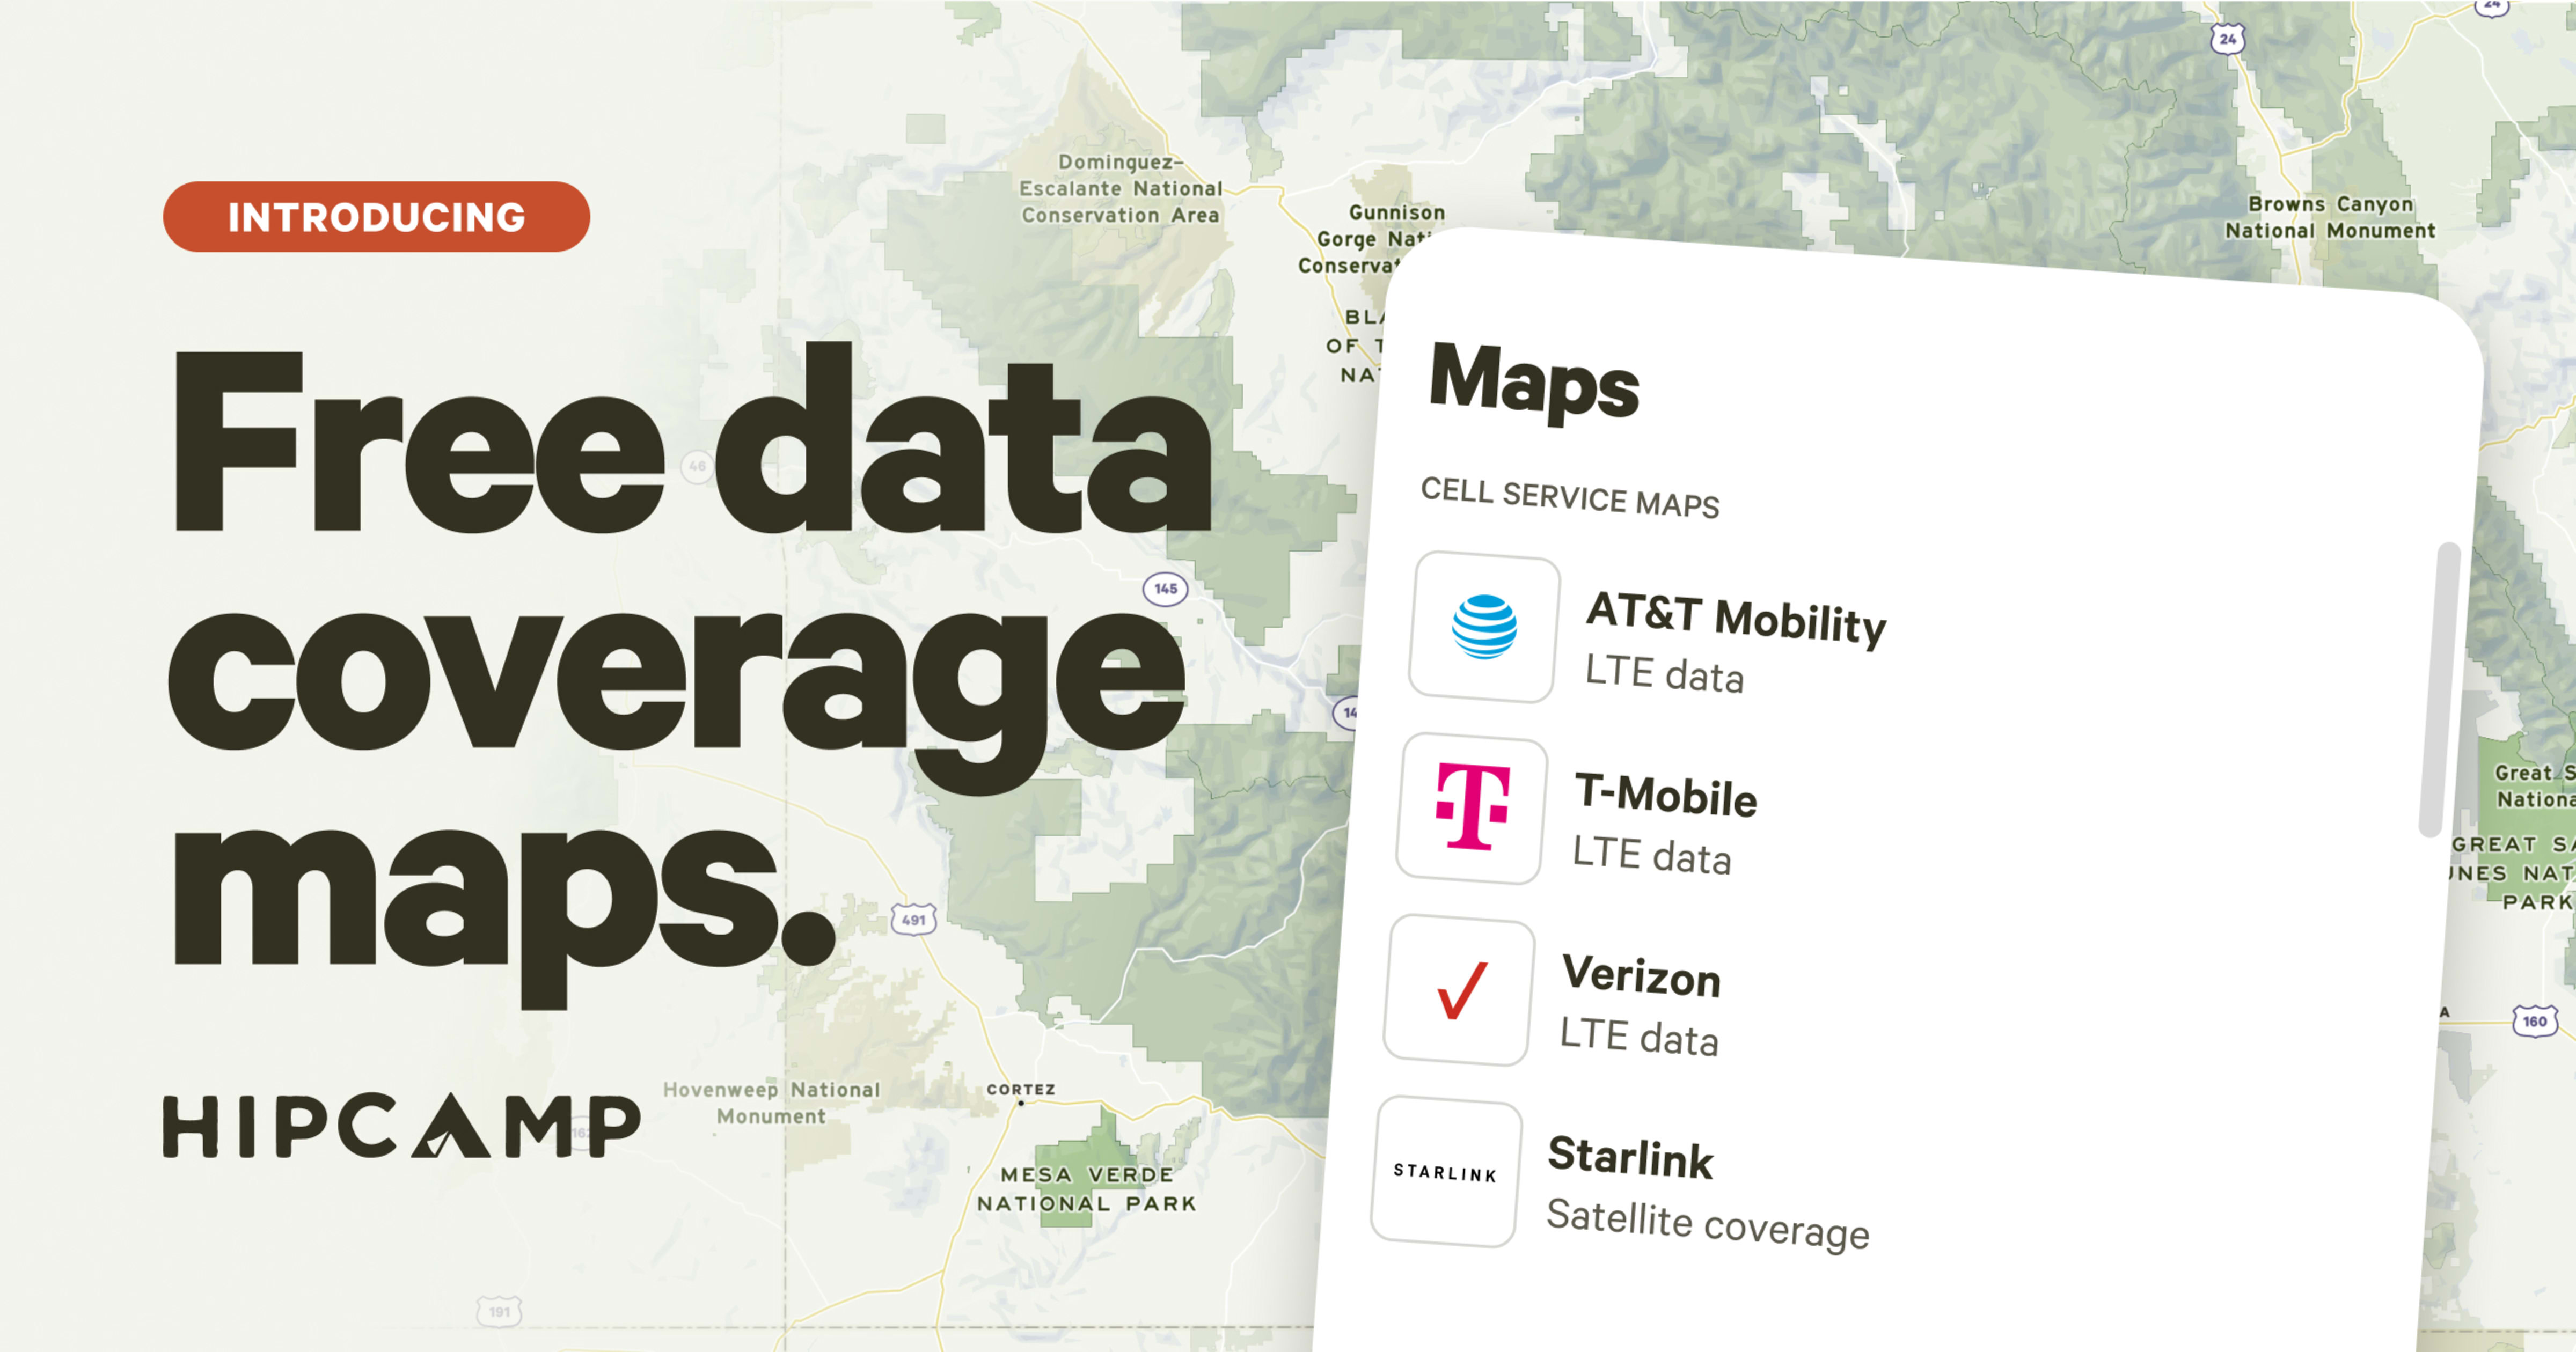 Free data coverage maps